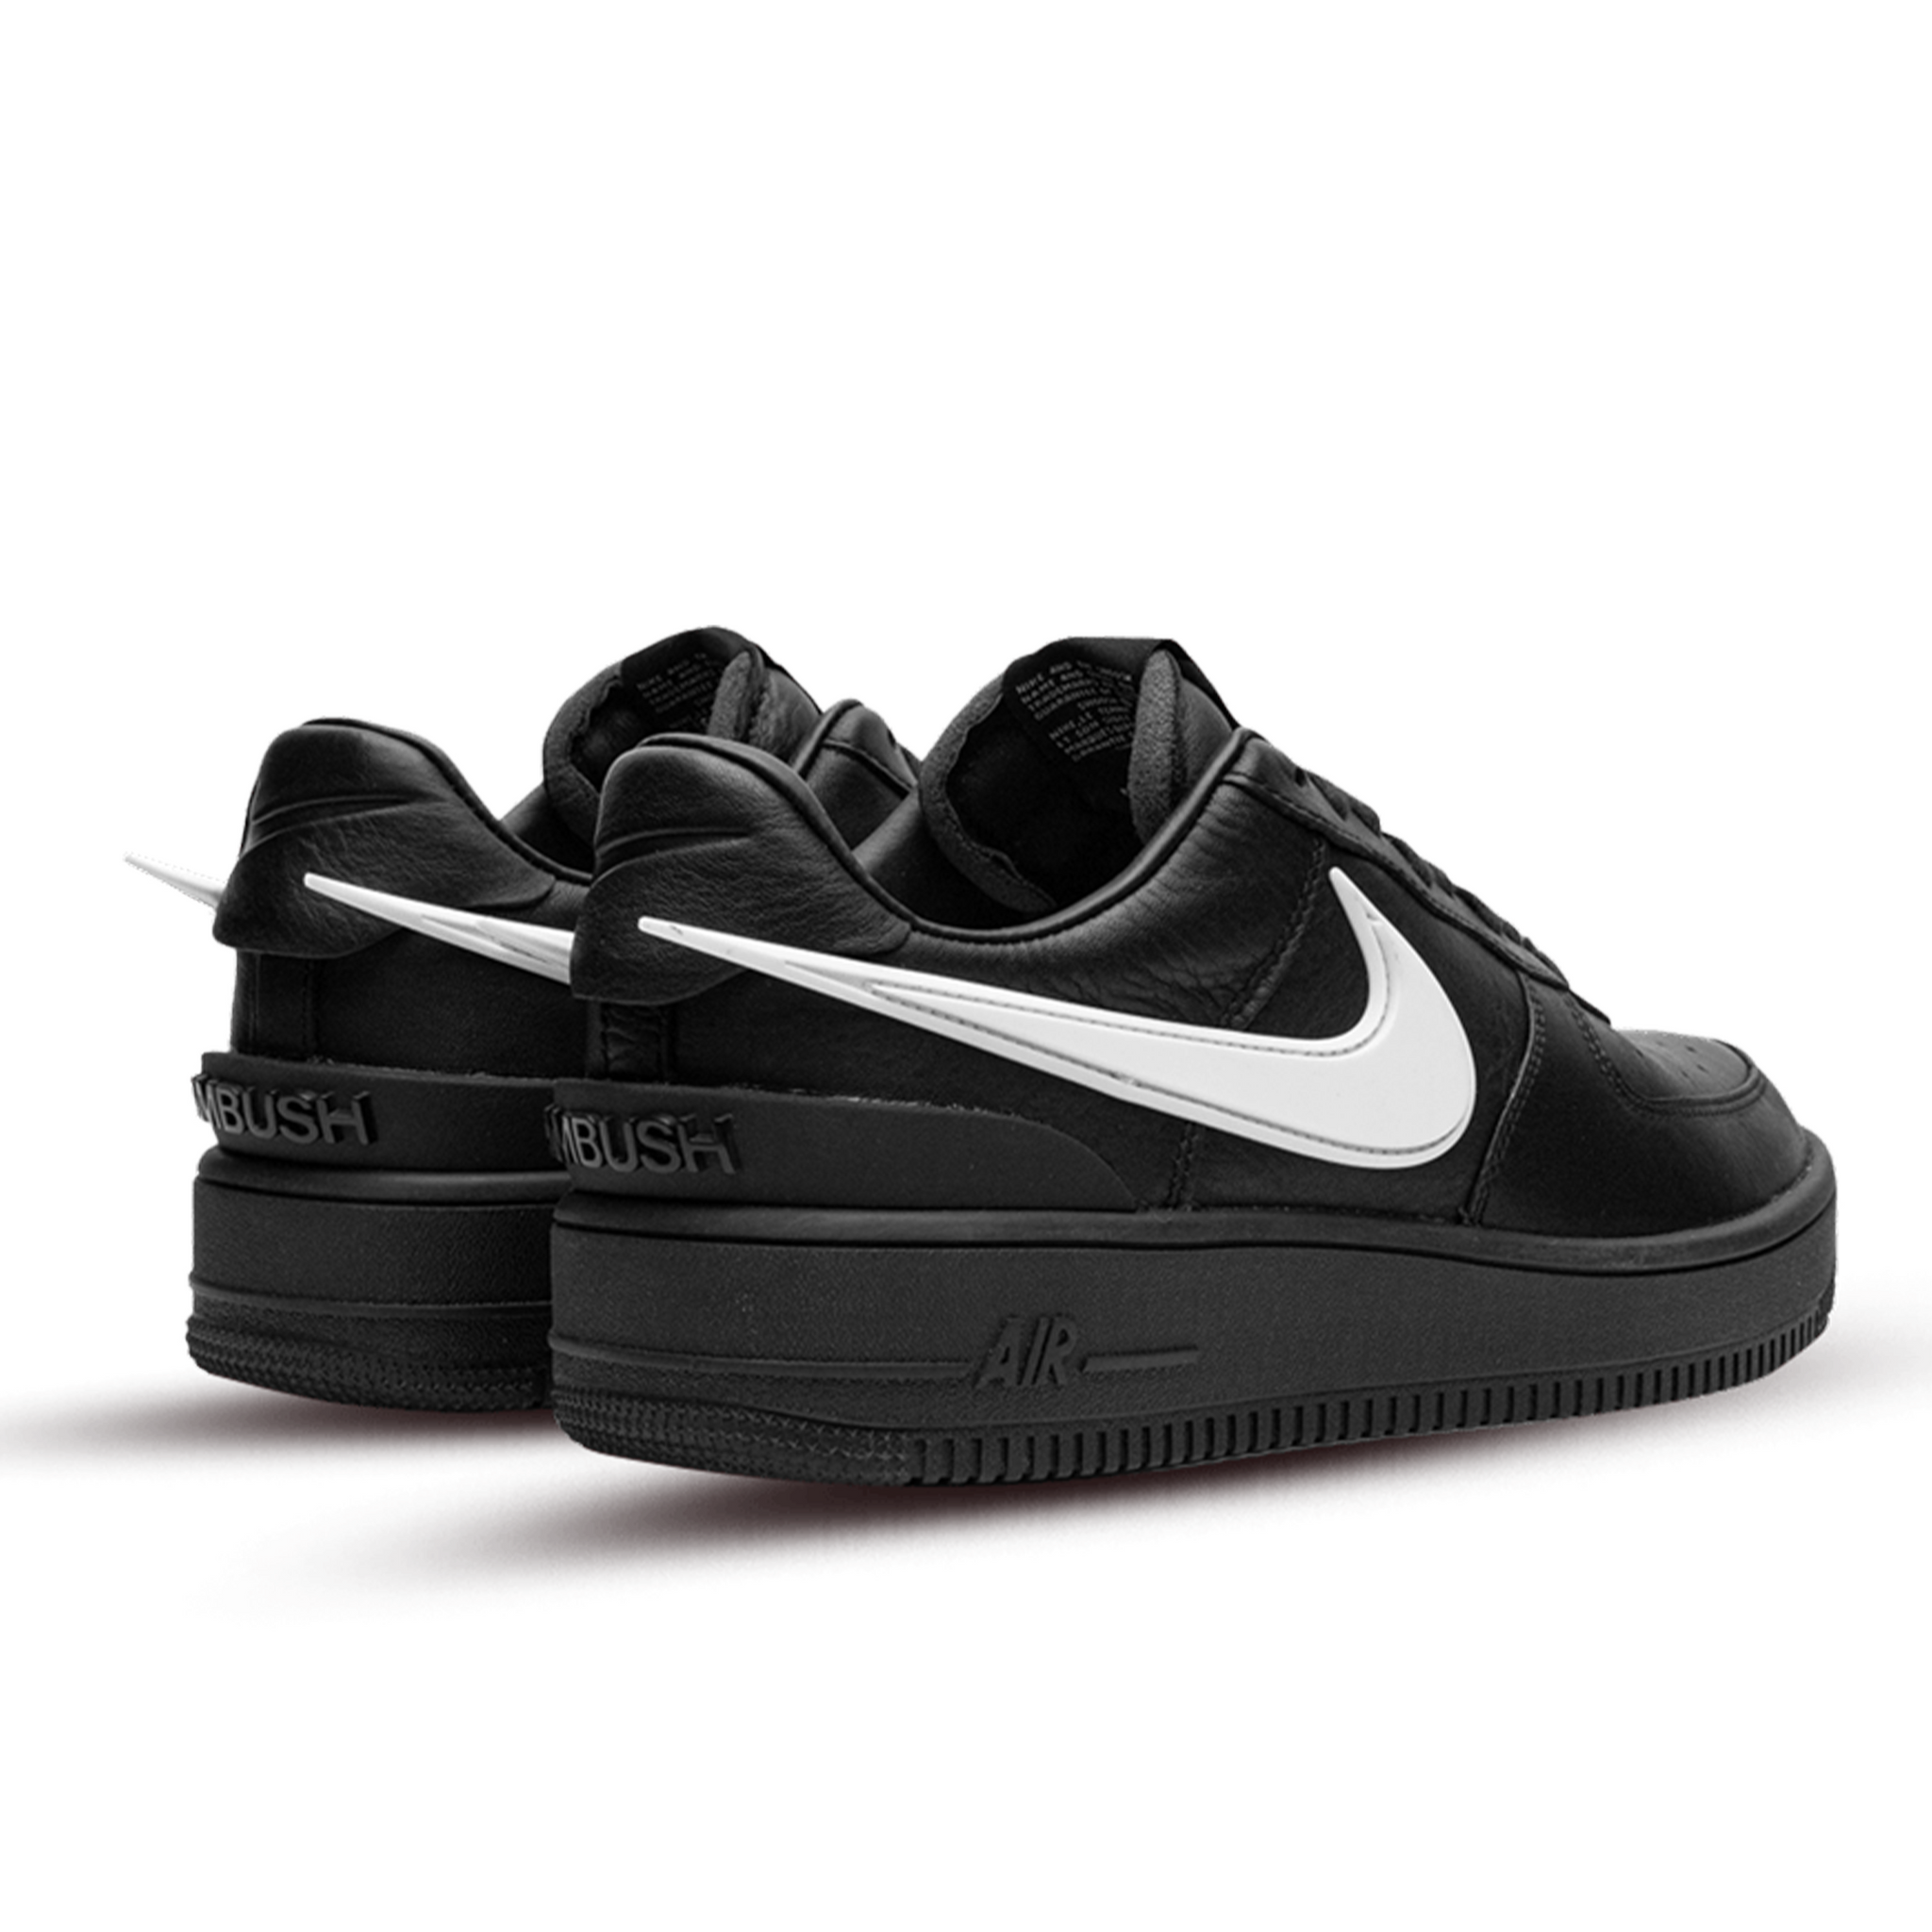 Nike Air Force 1 Low x AMBUSH "Black"